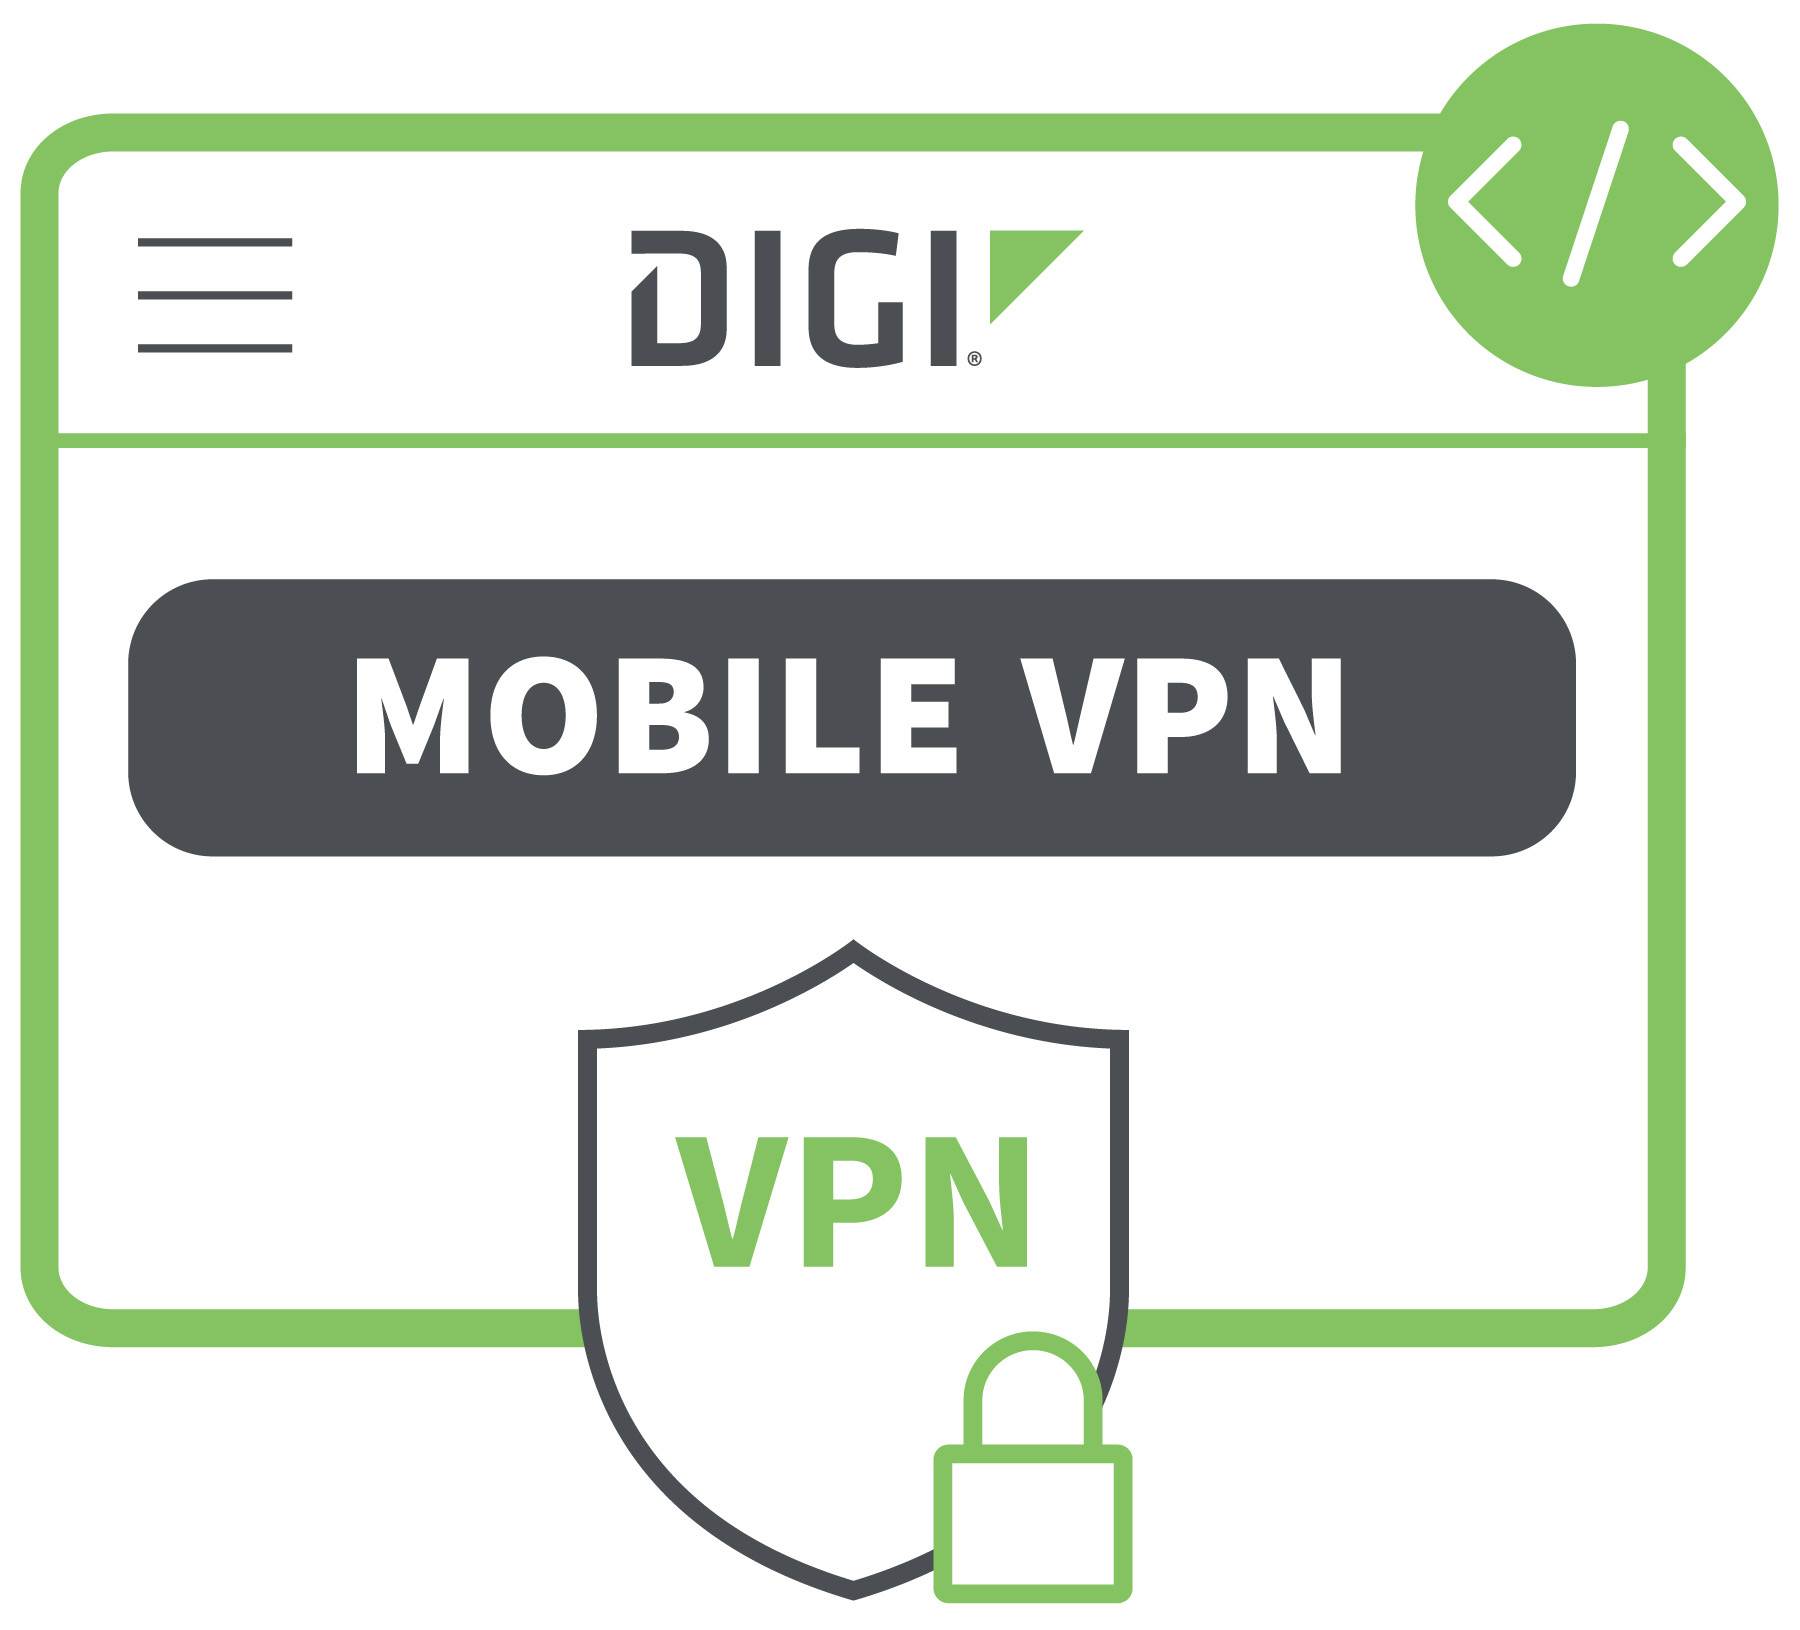 Digi Mobile VPN-Plakette